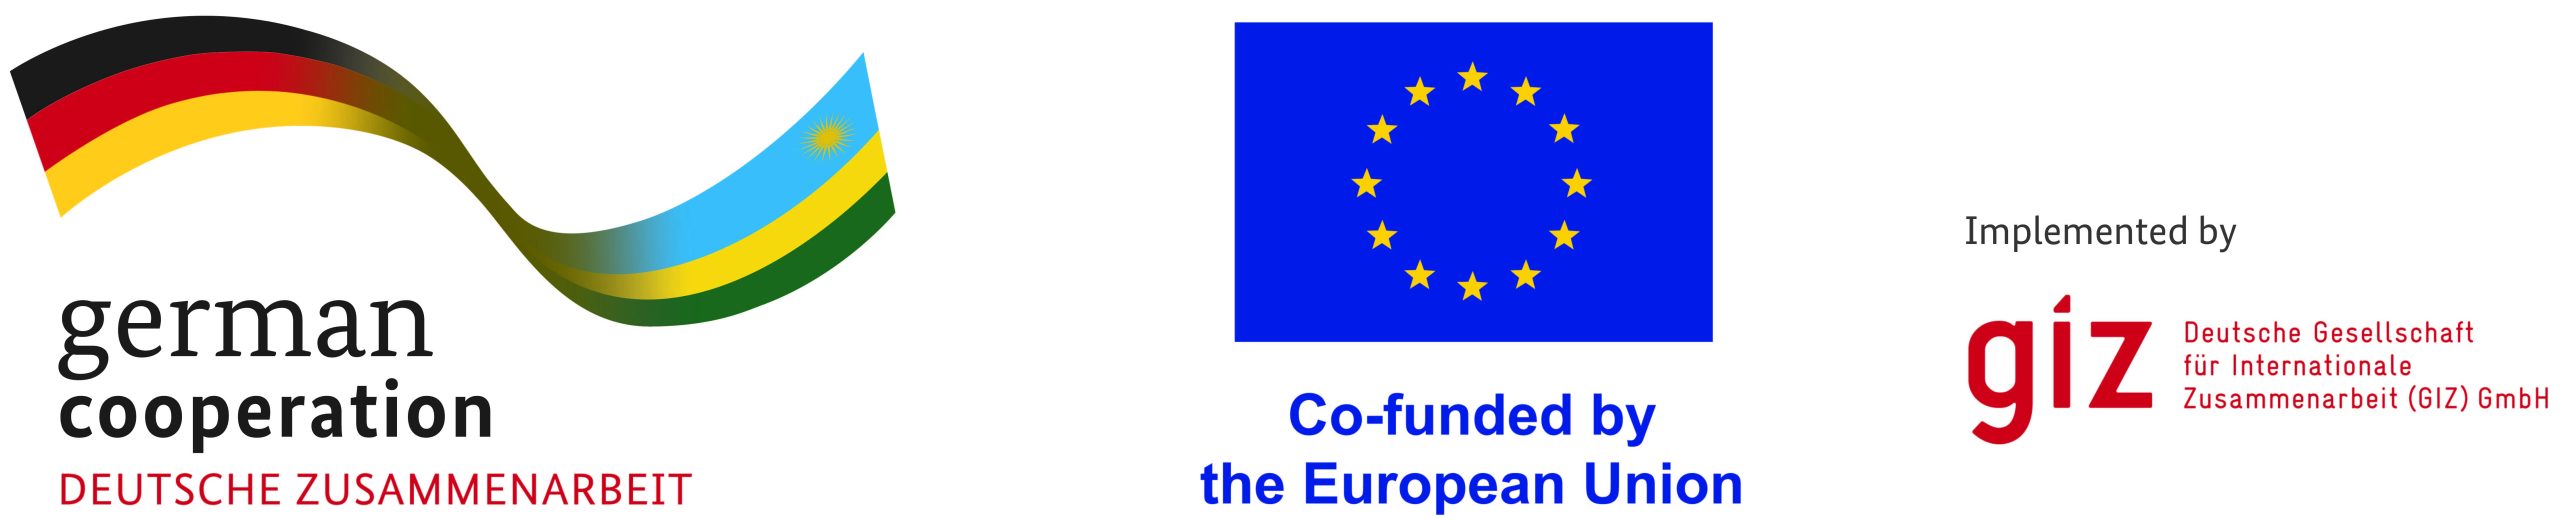 EU+GIZ+Coop Logo_high resolution-min